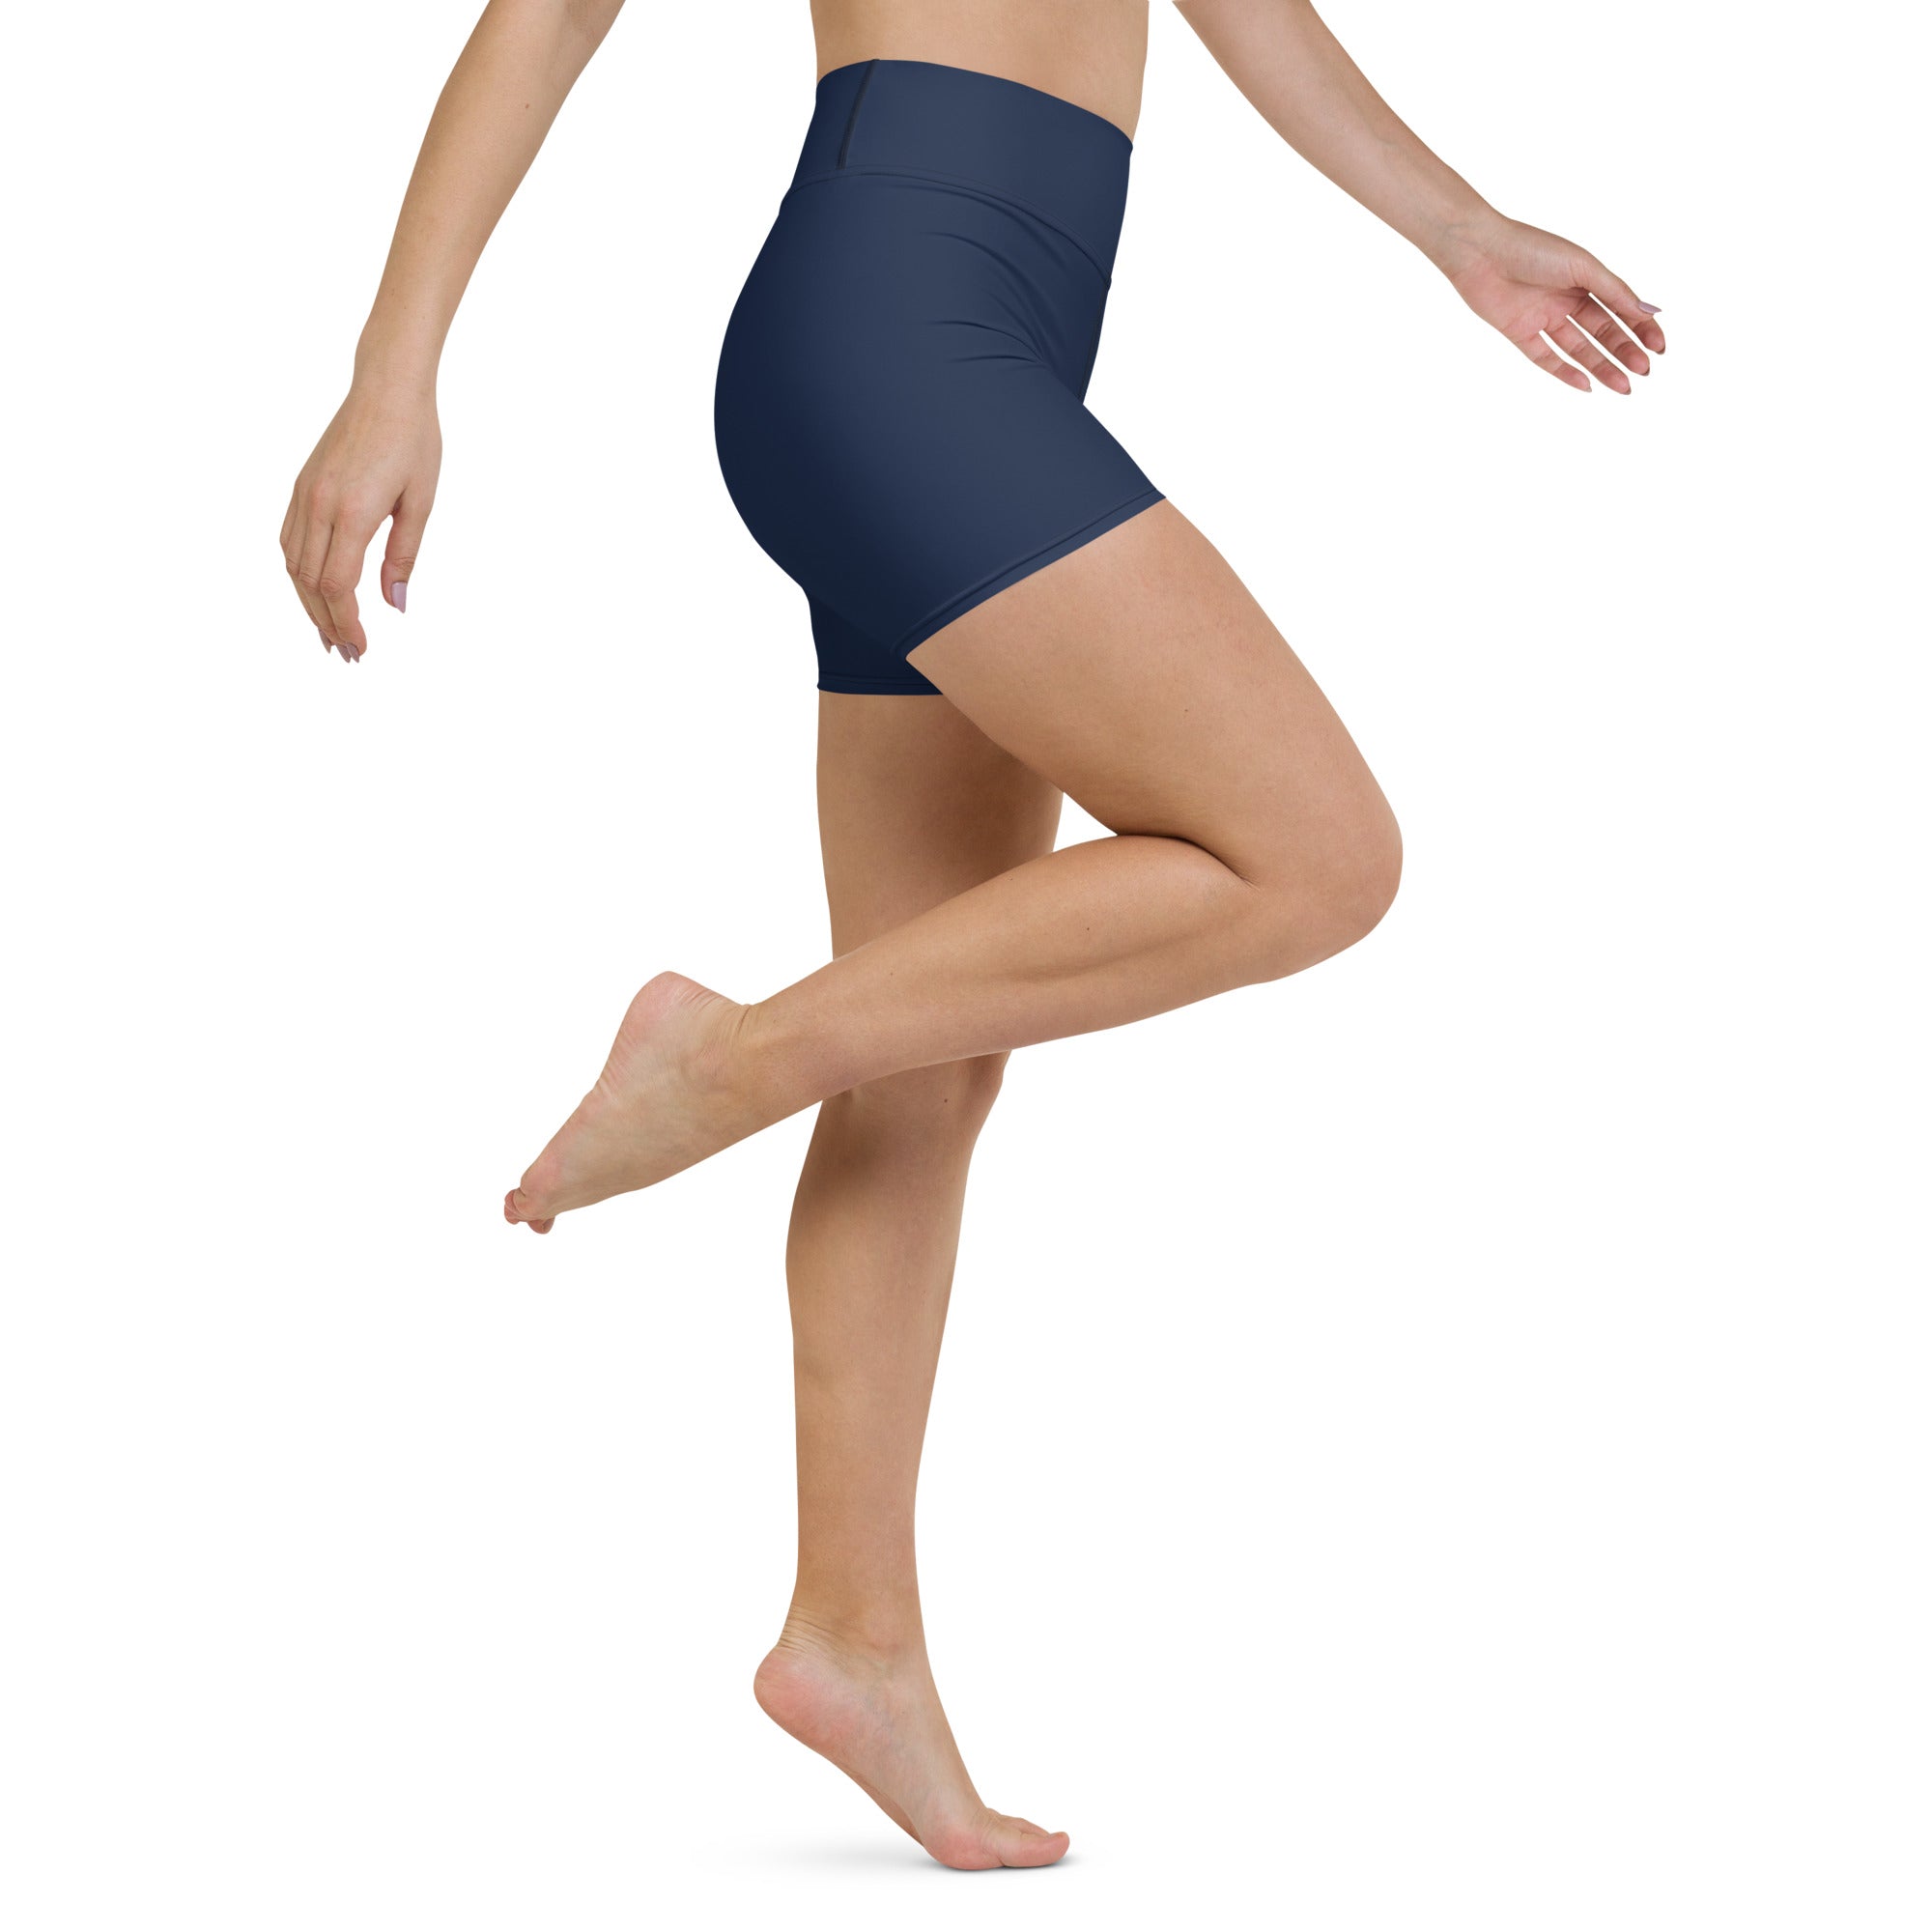 Sapphire Navy Yoga Shorts